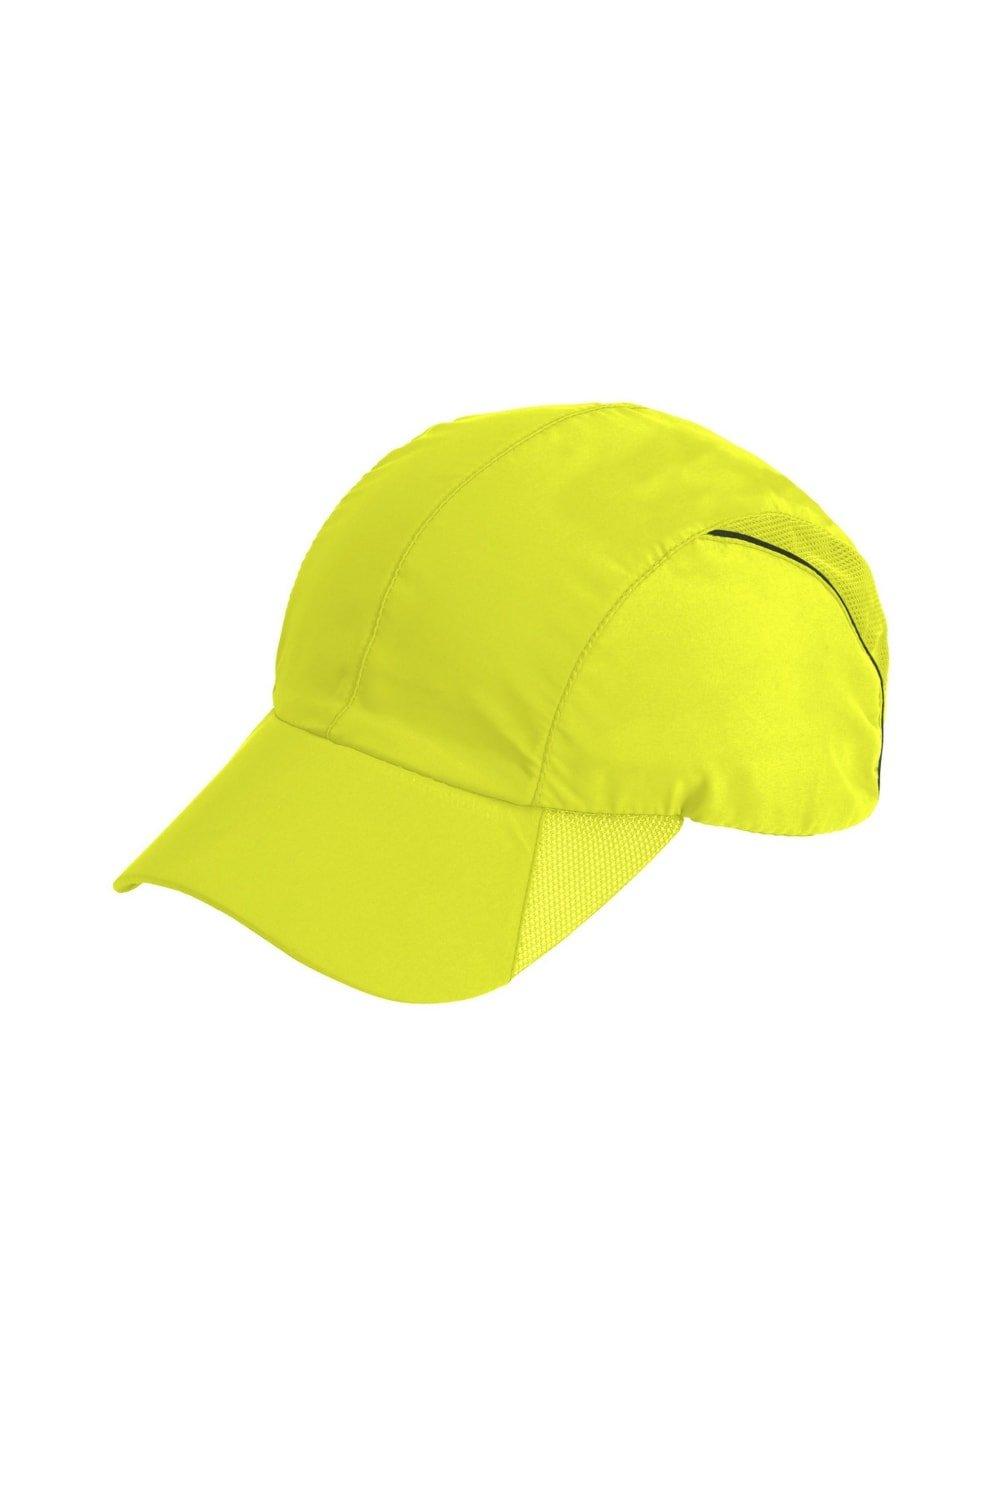 Ударная спортивная кепка Spiro, желтый